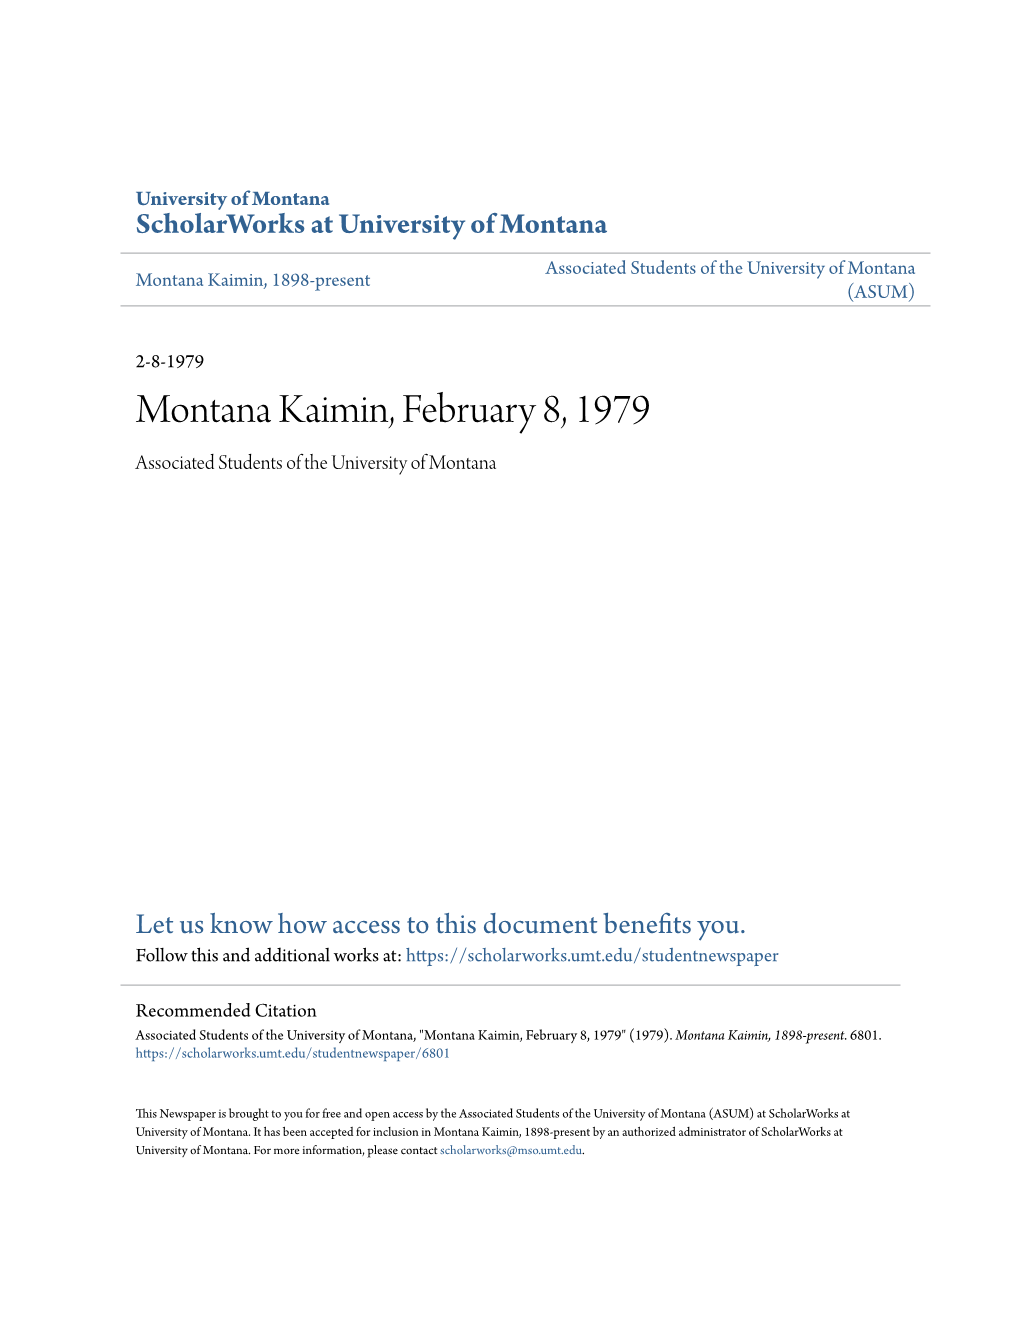 Montana Kaimin, February 8, 1979 Associated Students of the University of Montana